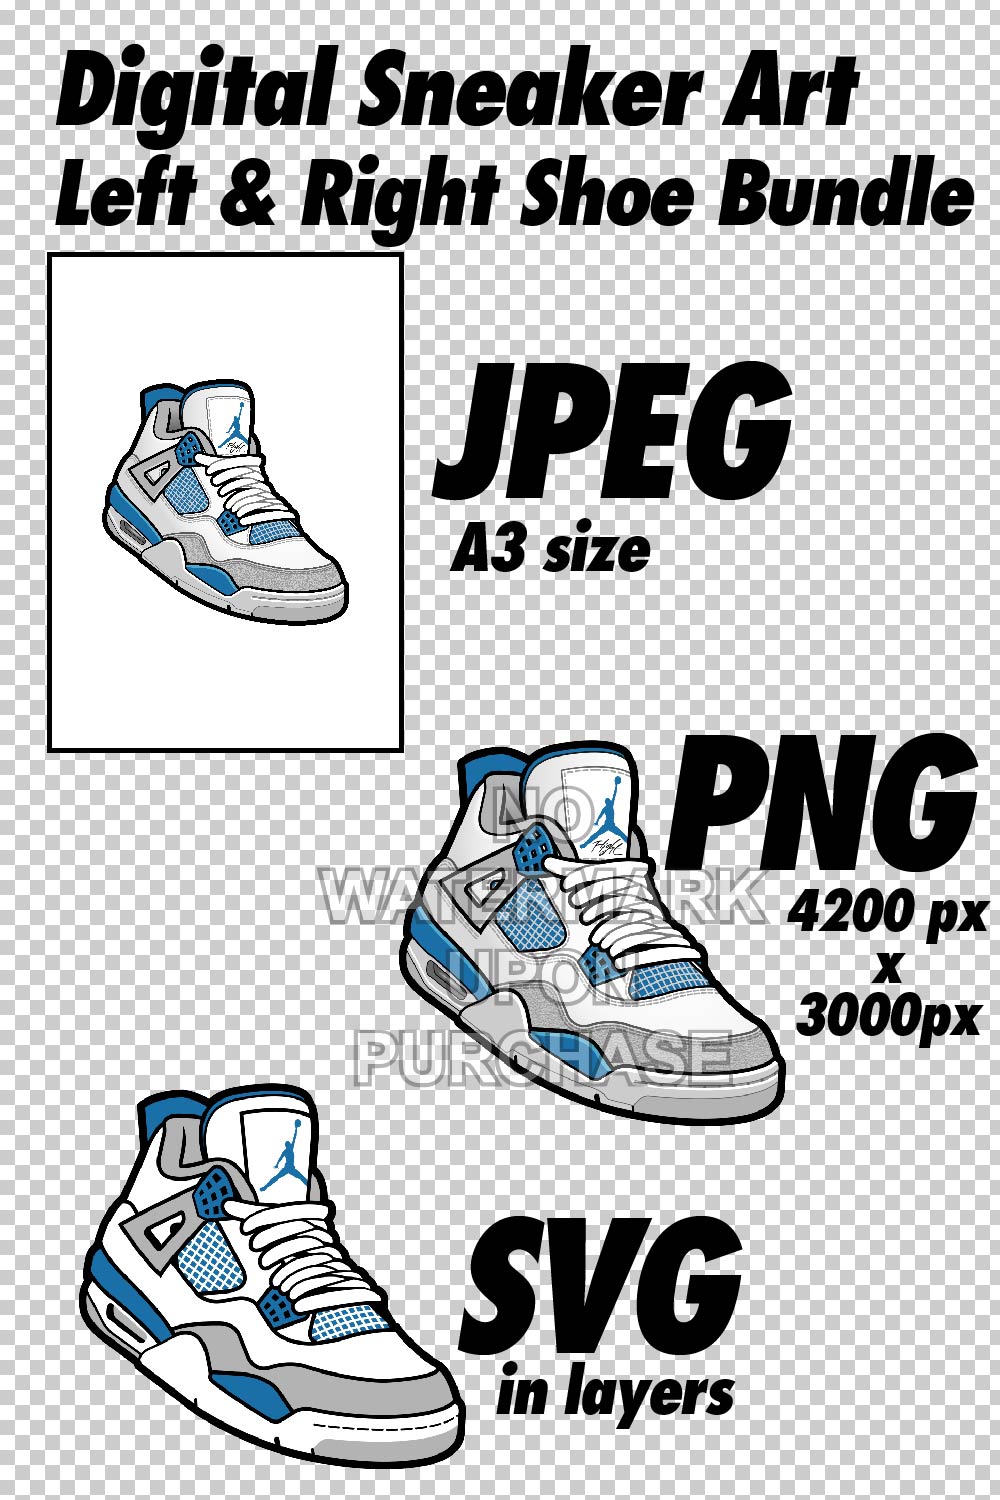 Air Jordan 4 Military Blue JPEG PNG SVG digital sneaker art pinterest preview image.